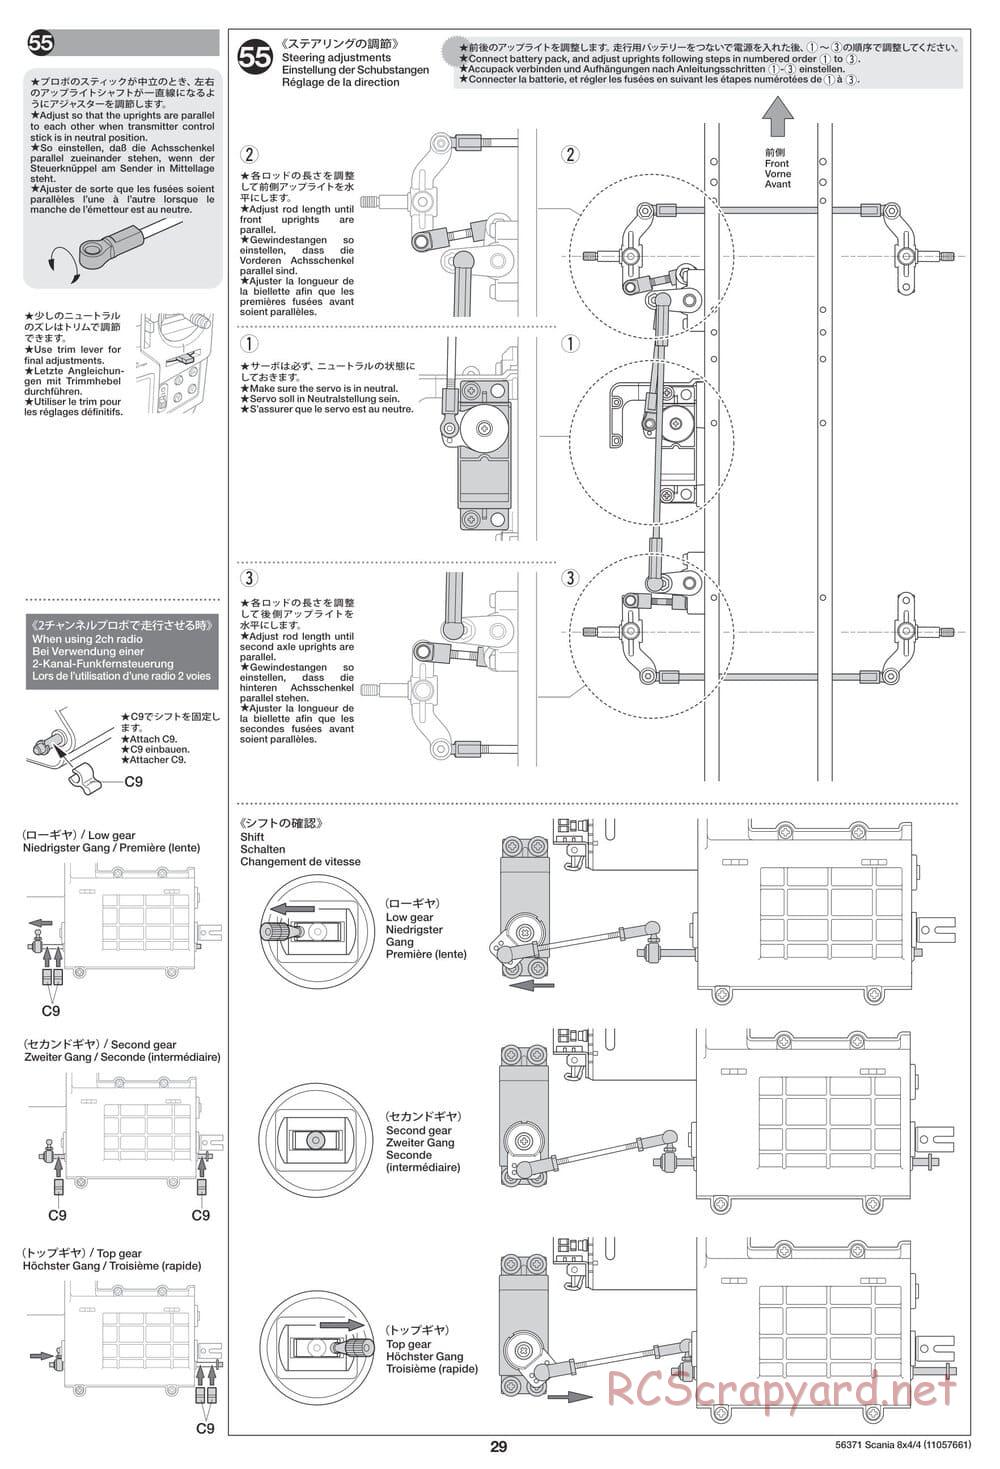 Tamiya - Scania 770 S 8x4/4 Chassis - Manual - Page 29